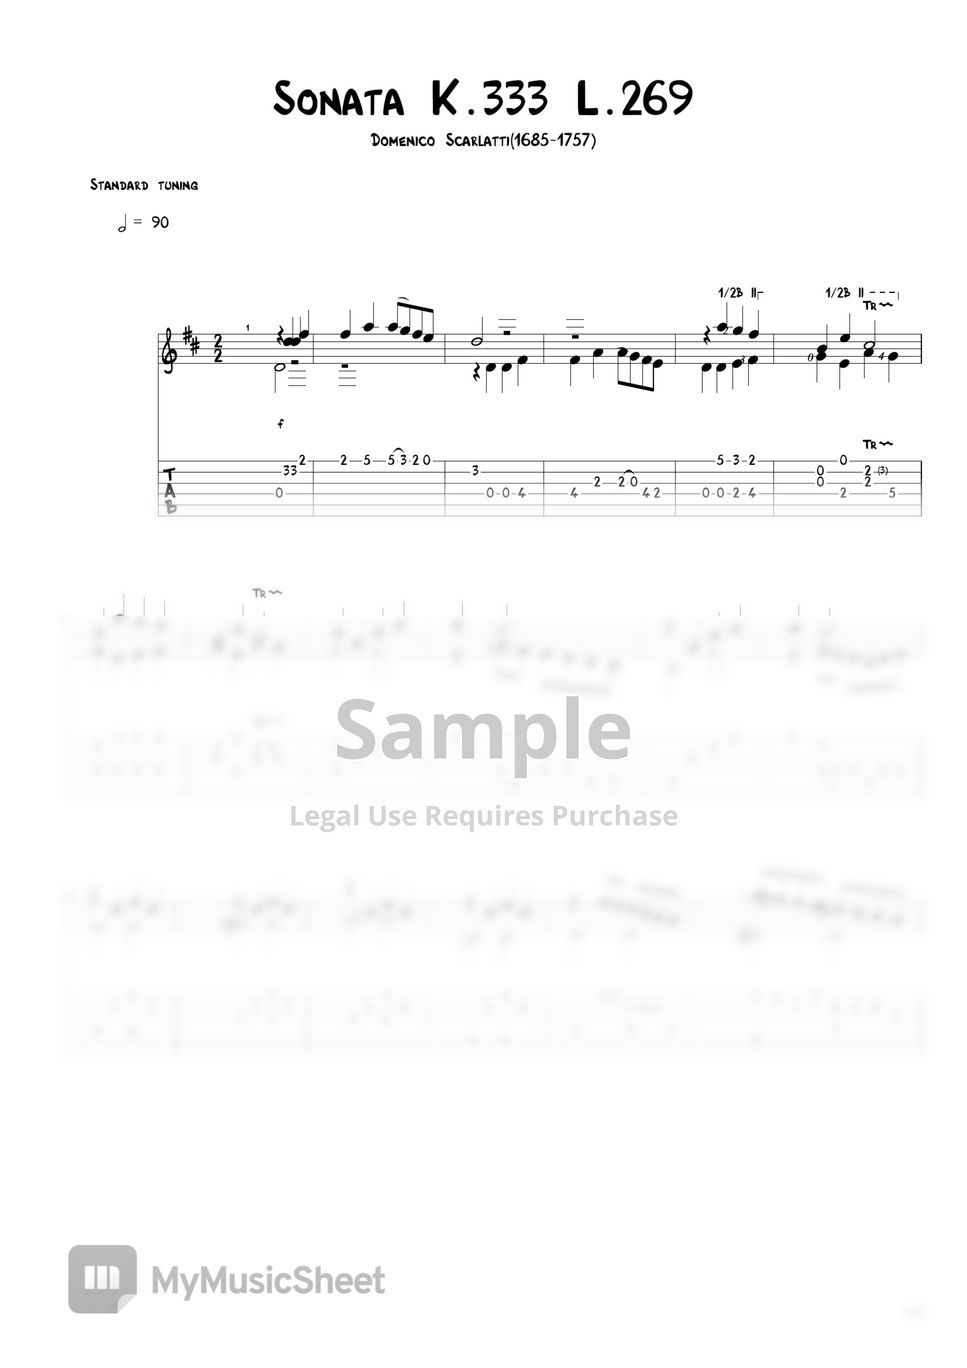 Domenico Scarlatti - Sonata K.333 L.269 Tab + 1staff by Agape Guitar